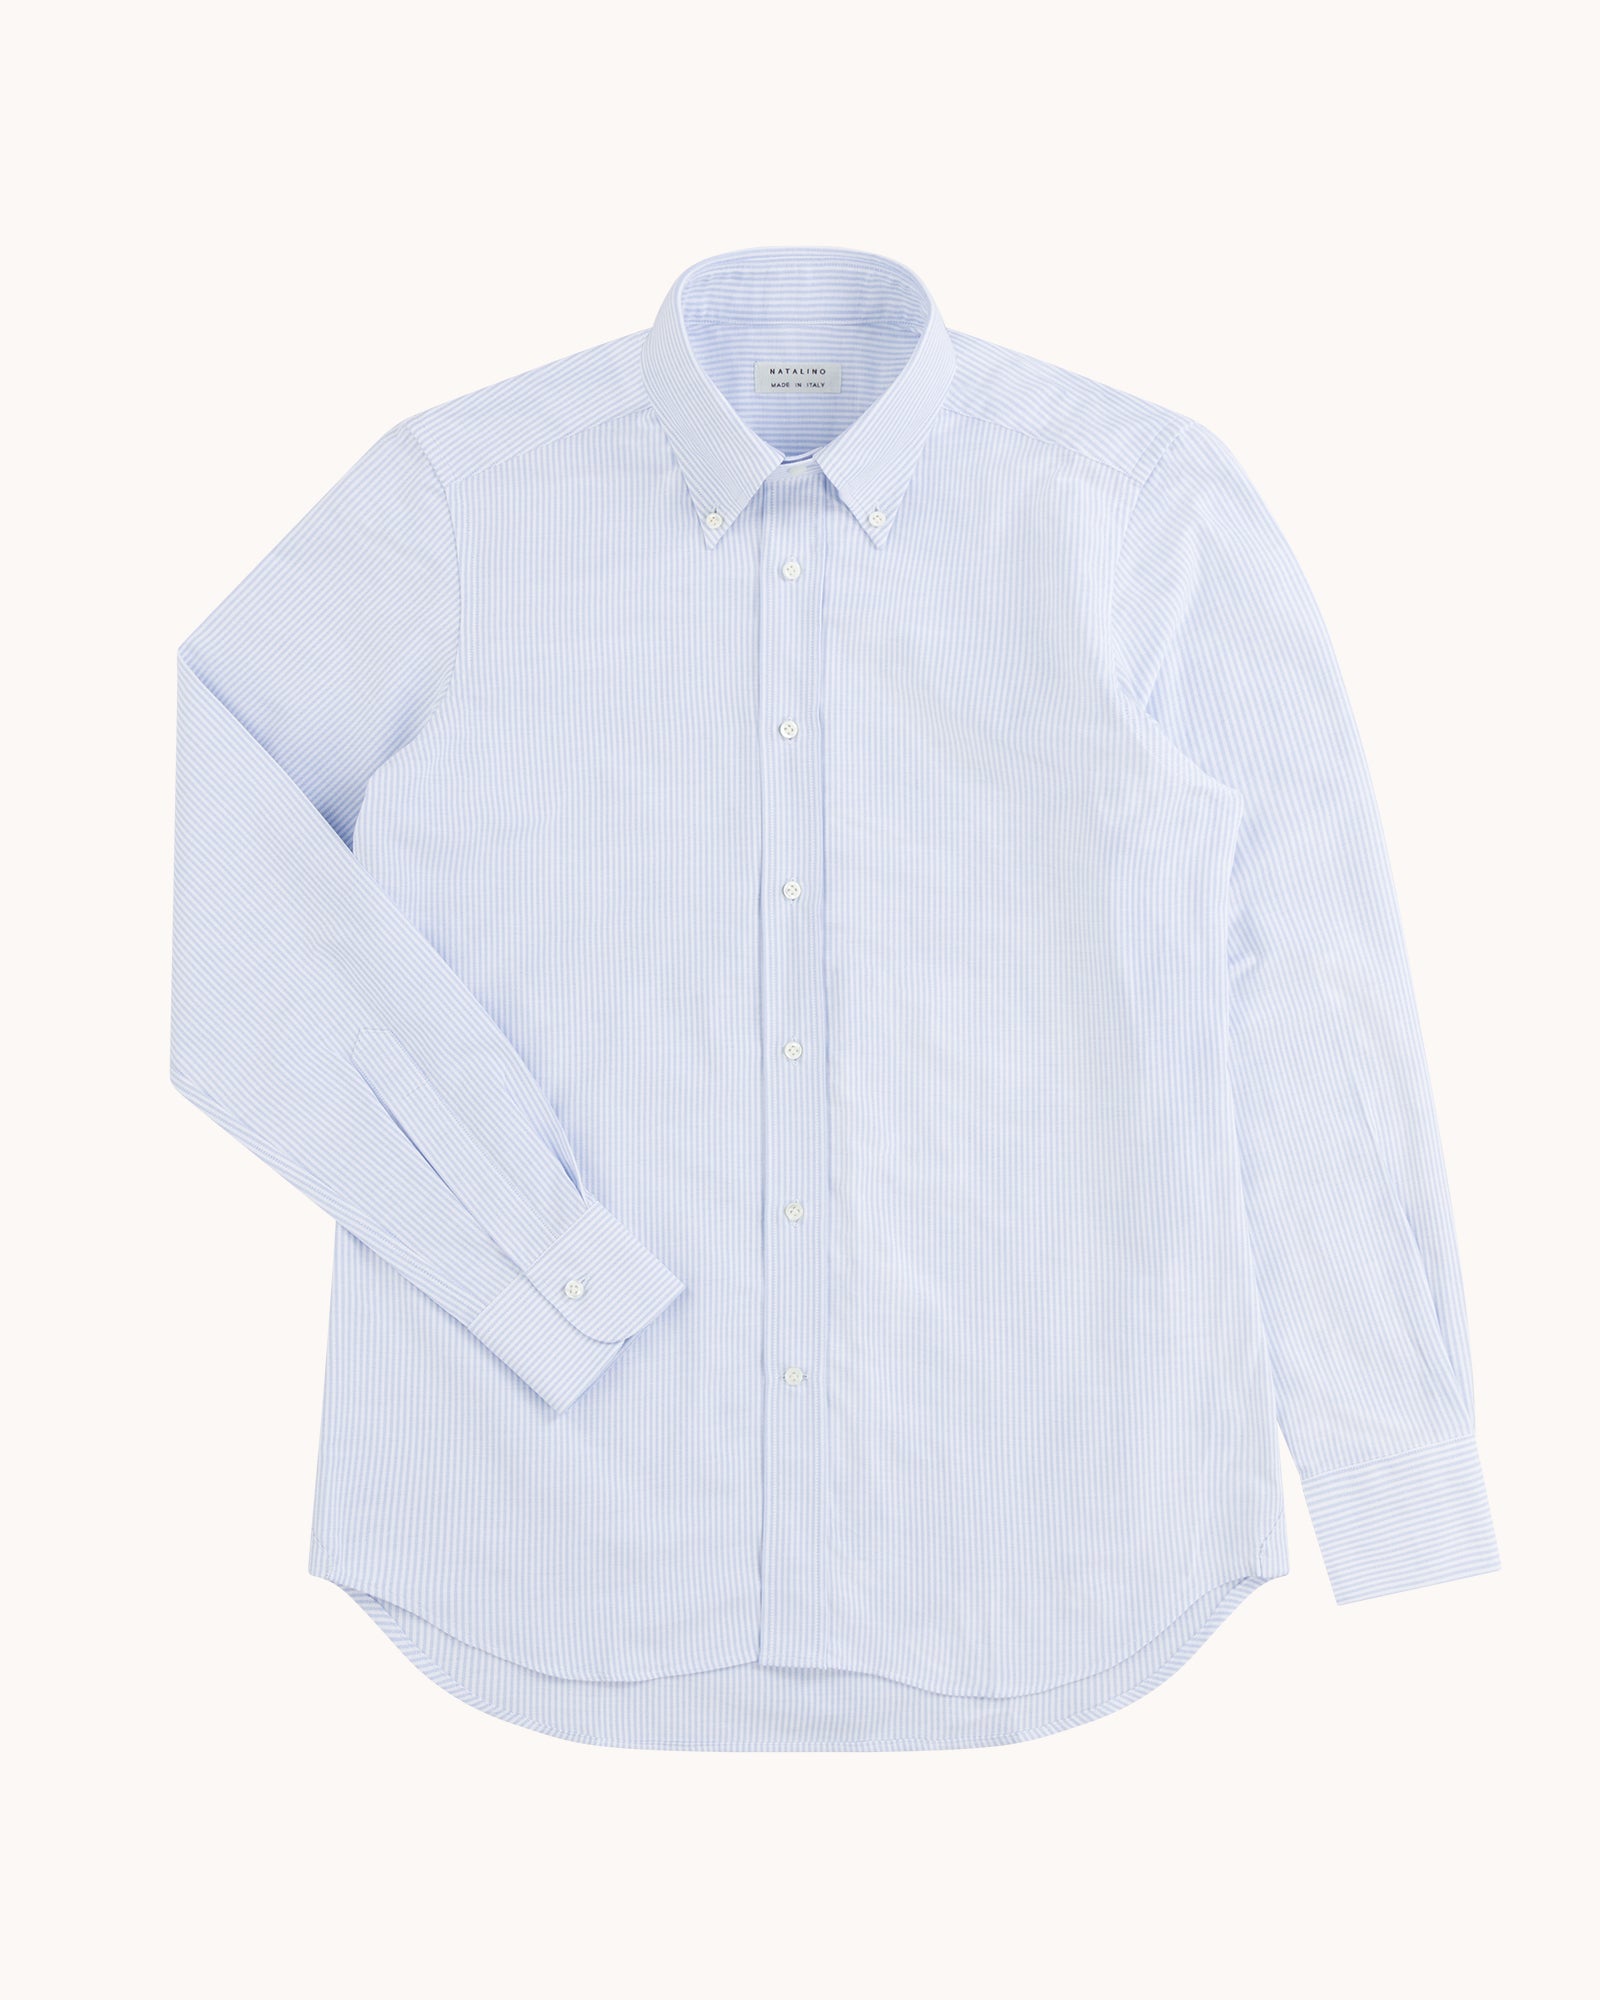 Button Down Collar Shirt - Blue Stripe Oxford Cotton